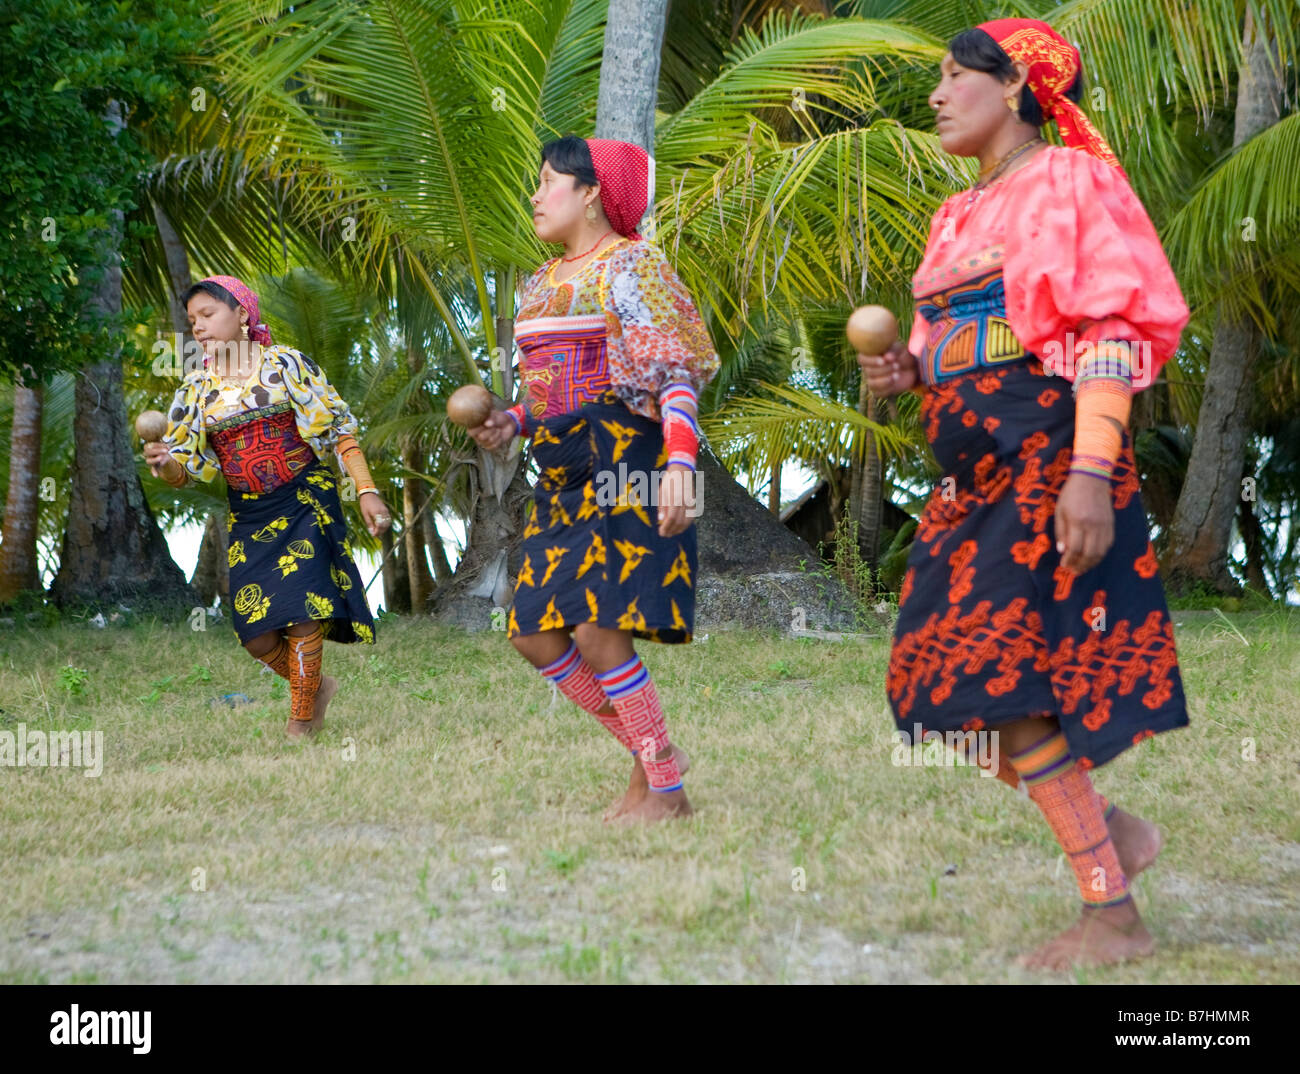 Local Kuna Indians practicing a traditional dance on Isla Pelikano San Blas Islands Panama Stock Photo